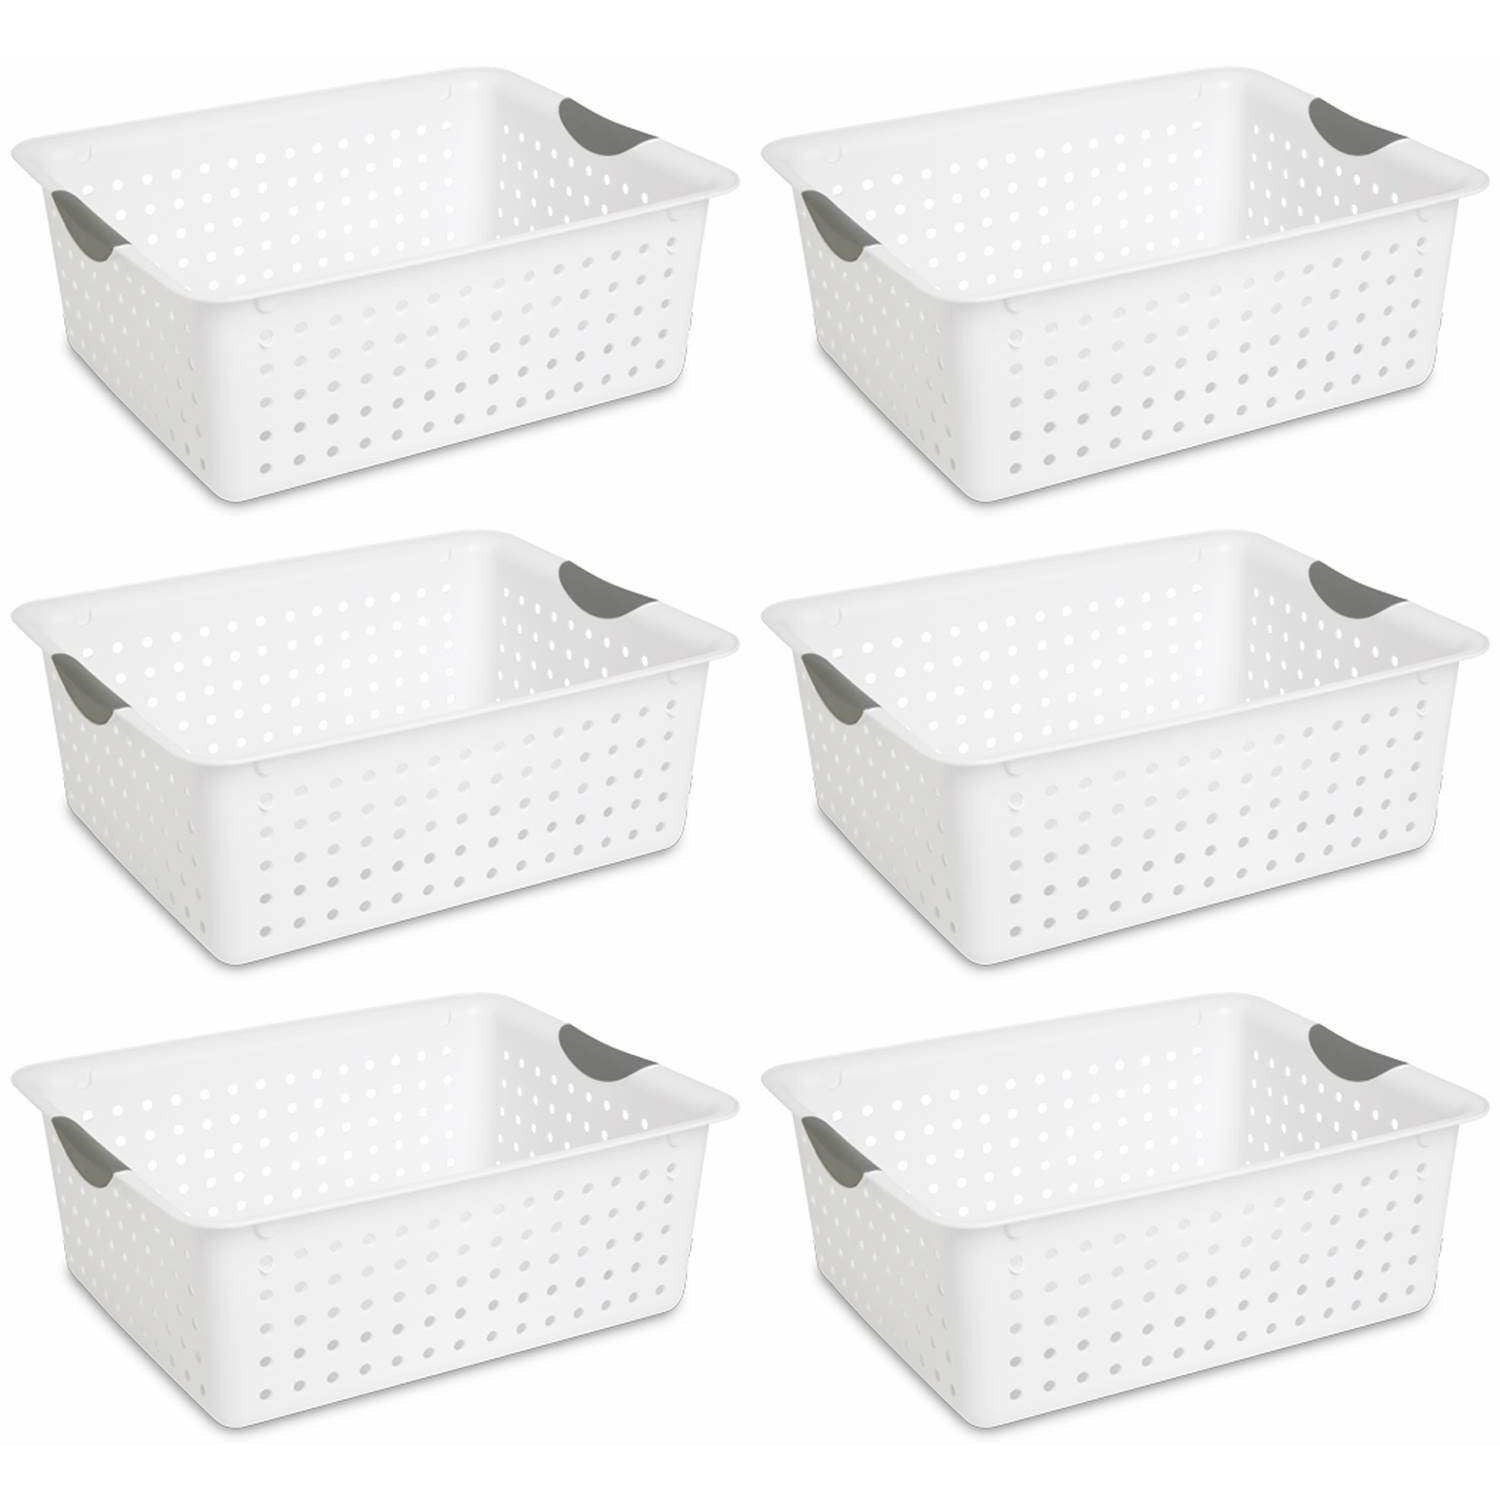 Sterilite Large Ultra Plastic Storage Baskets w/ Handles, White, 30 Pack 